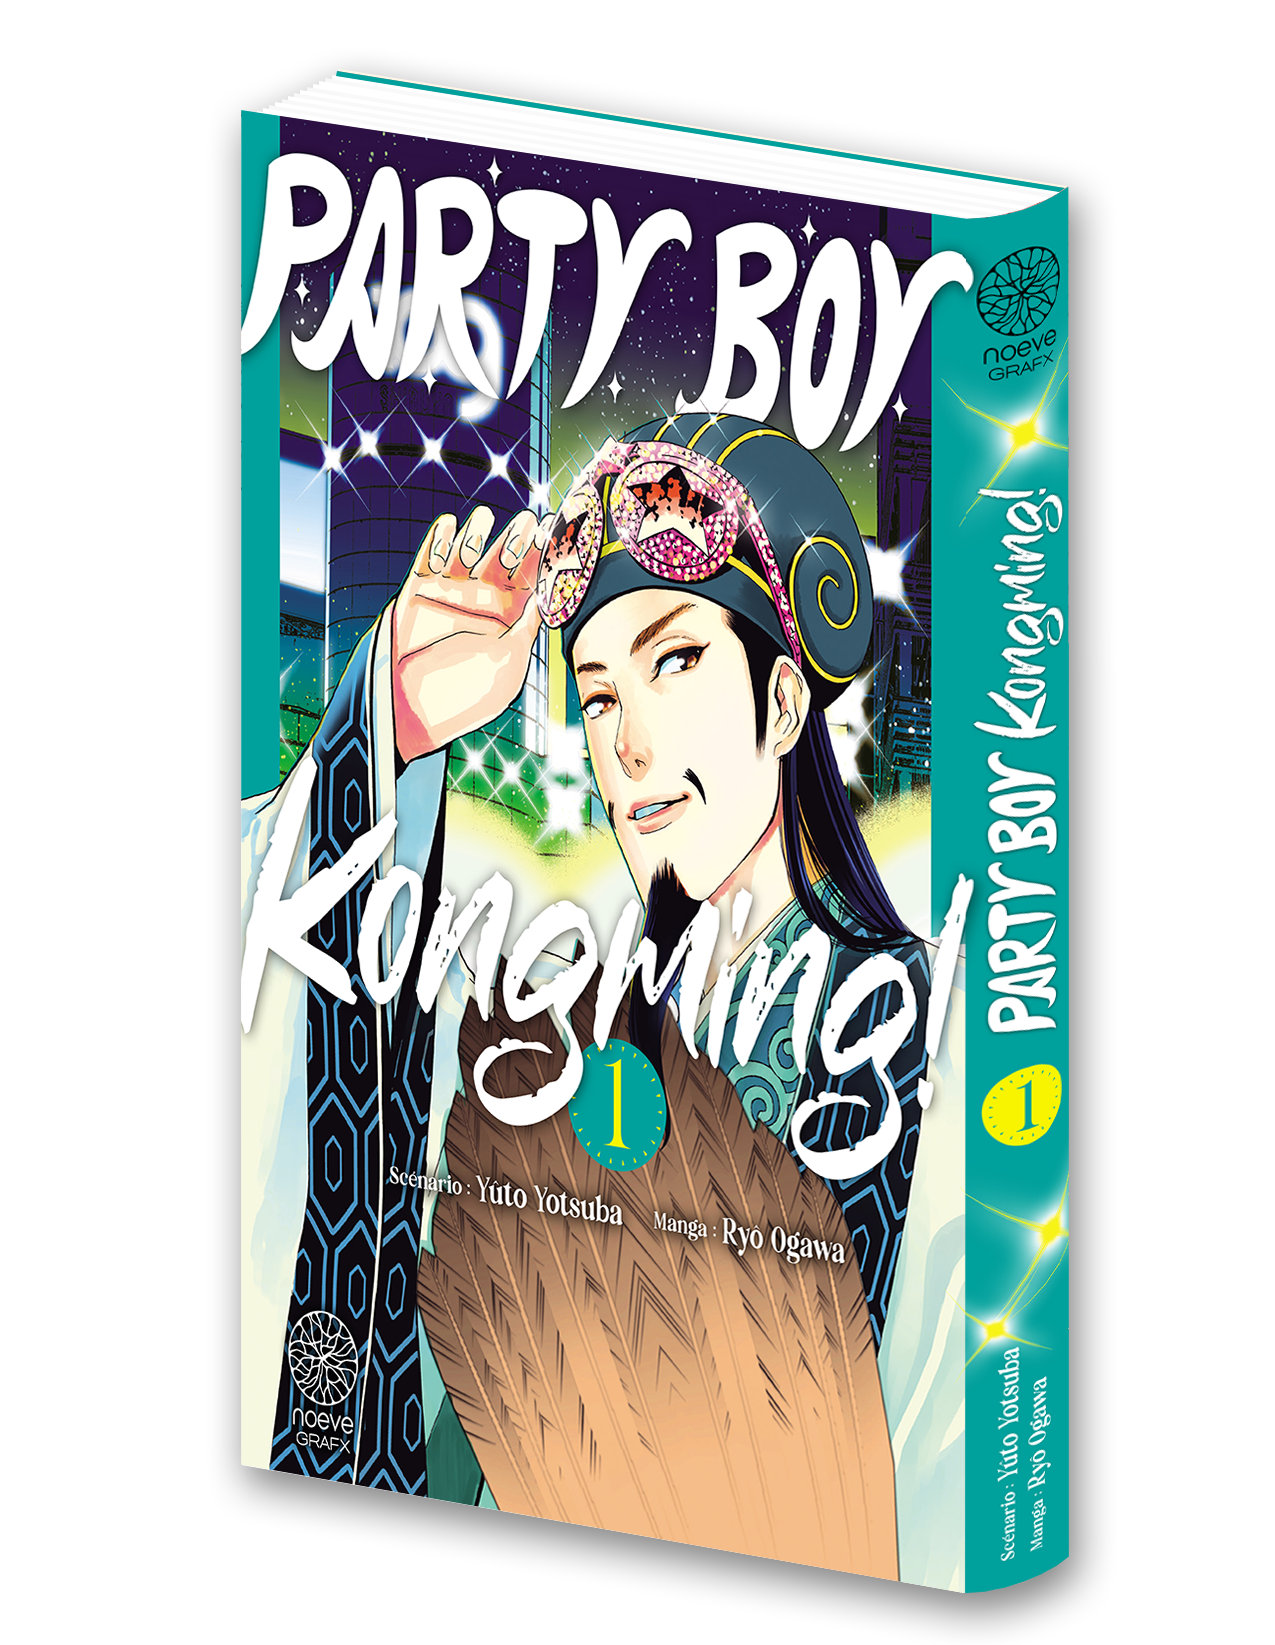 Visuel 3D du manga Party Boy Kongming!